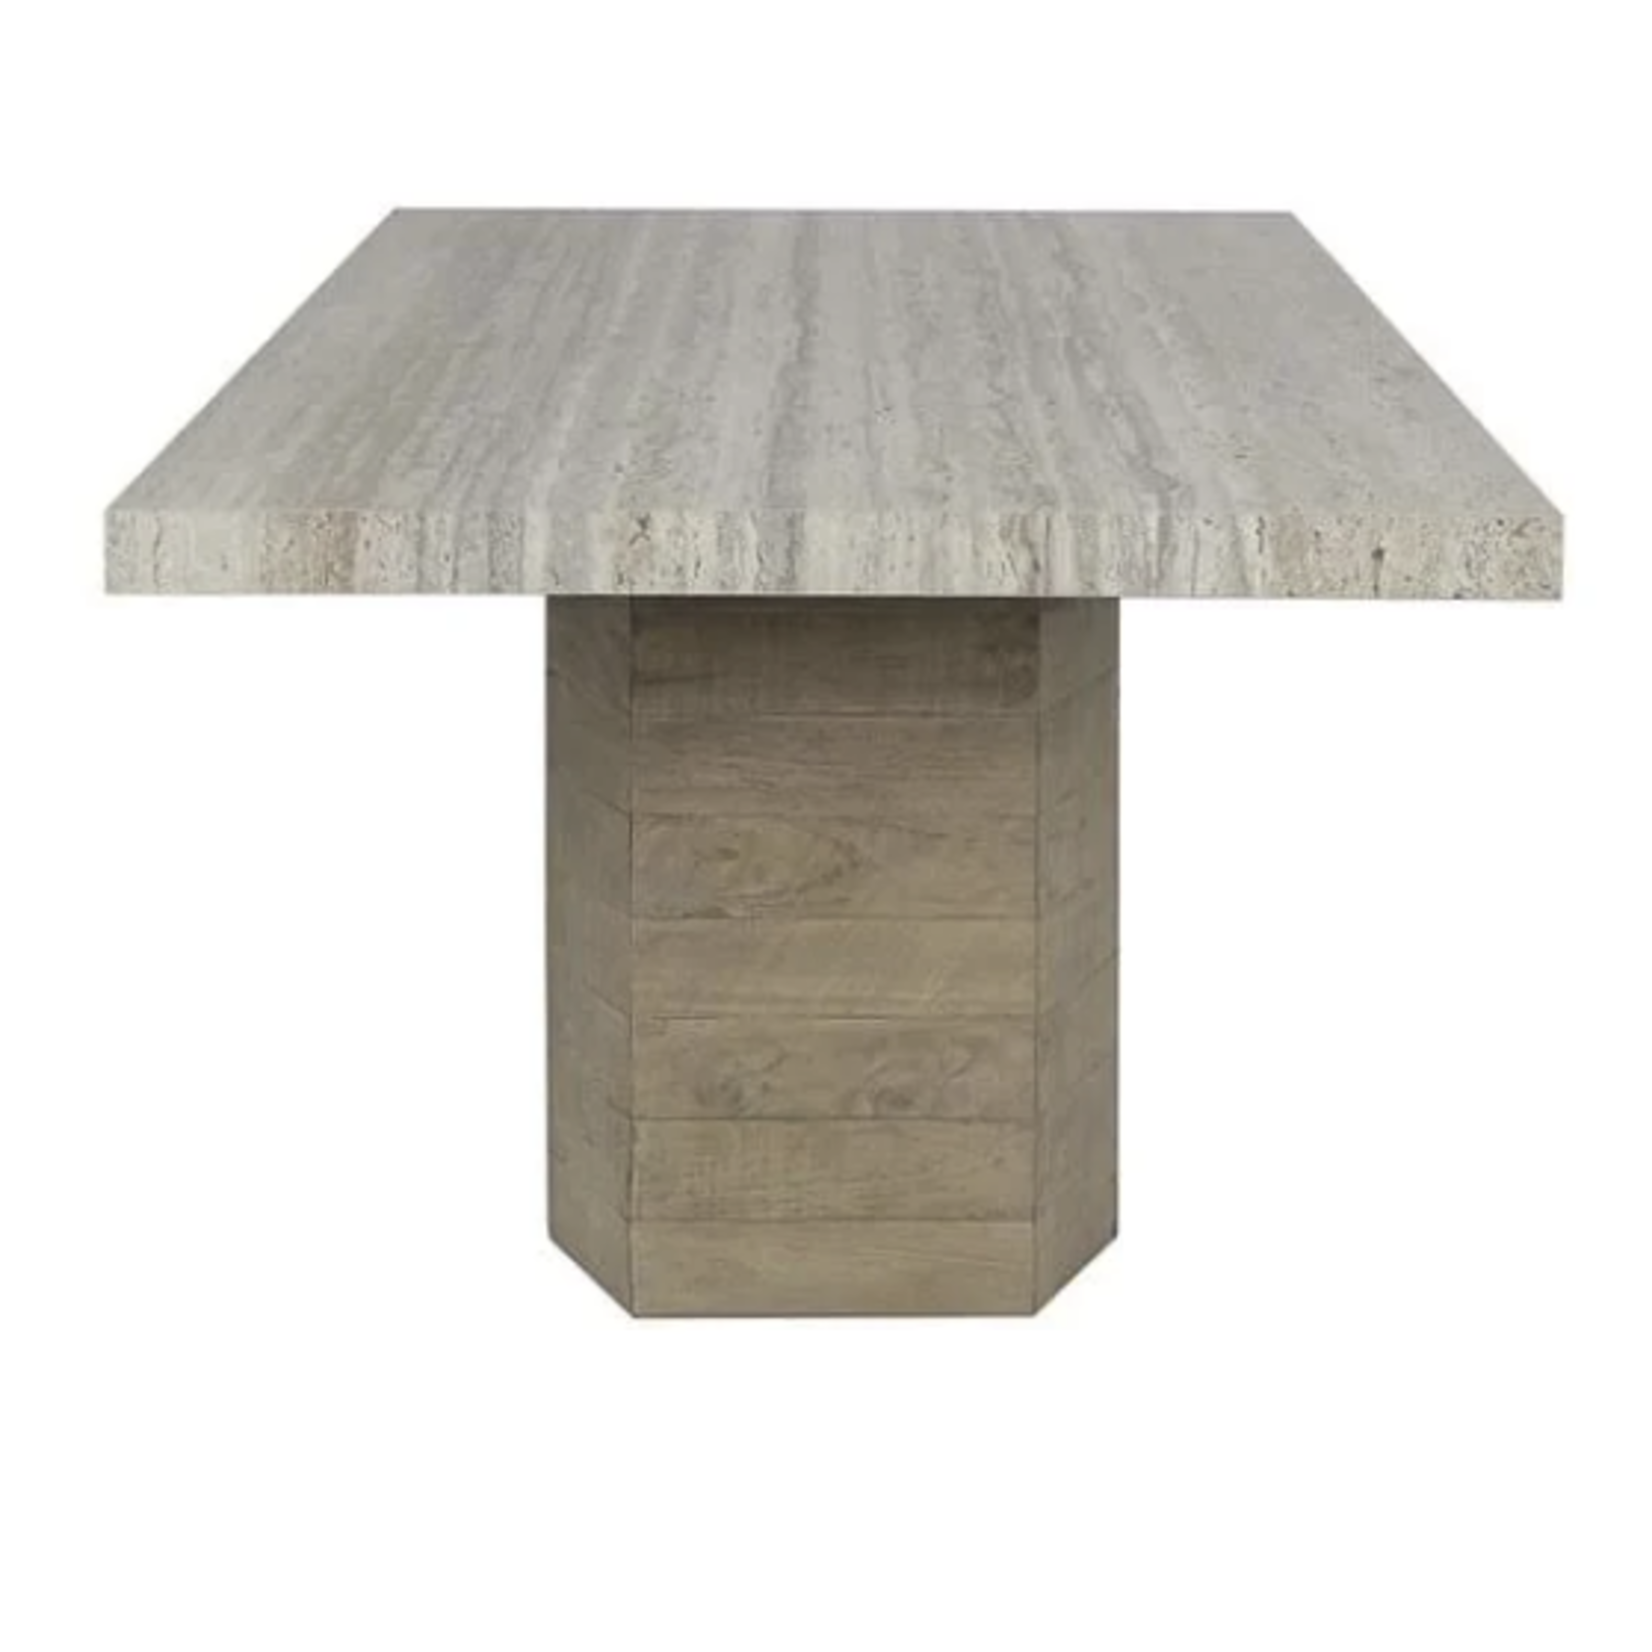 Outside The Box 84x43 Ravenna Reclaimed Pine & Concrete Laminate Rectangular Dining Table